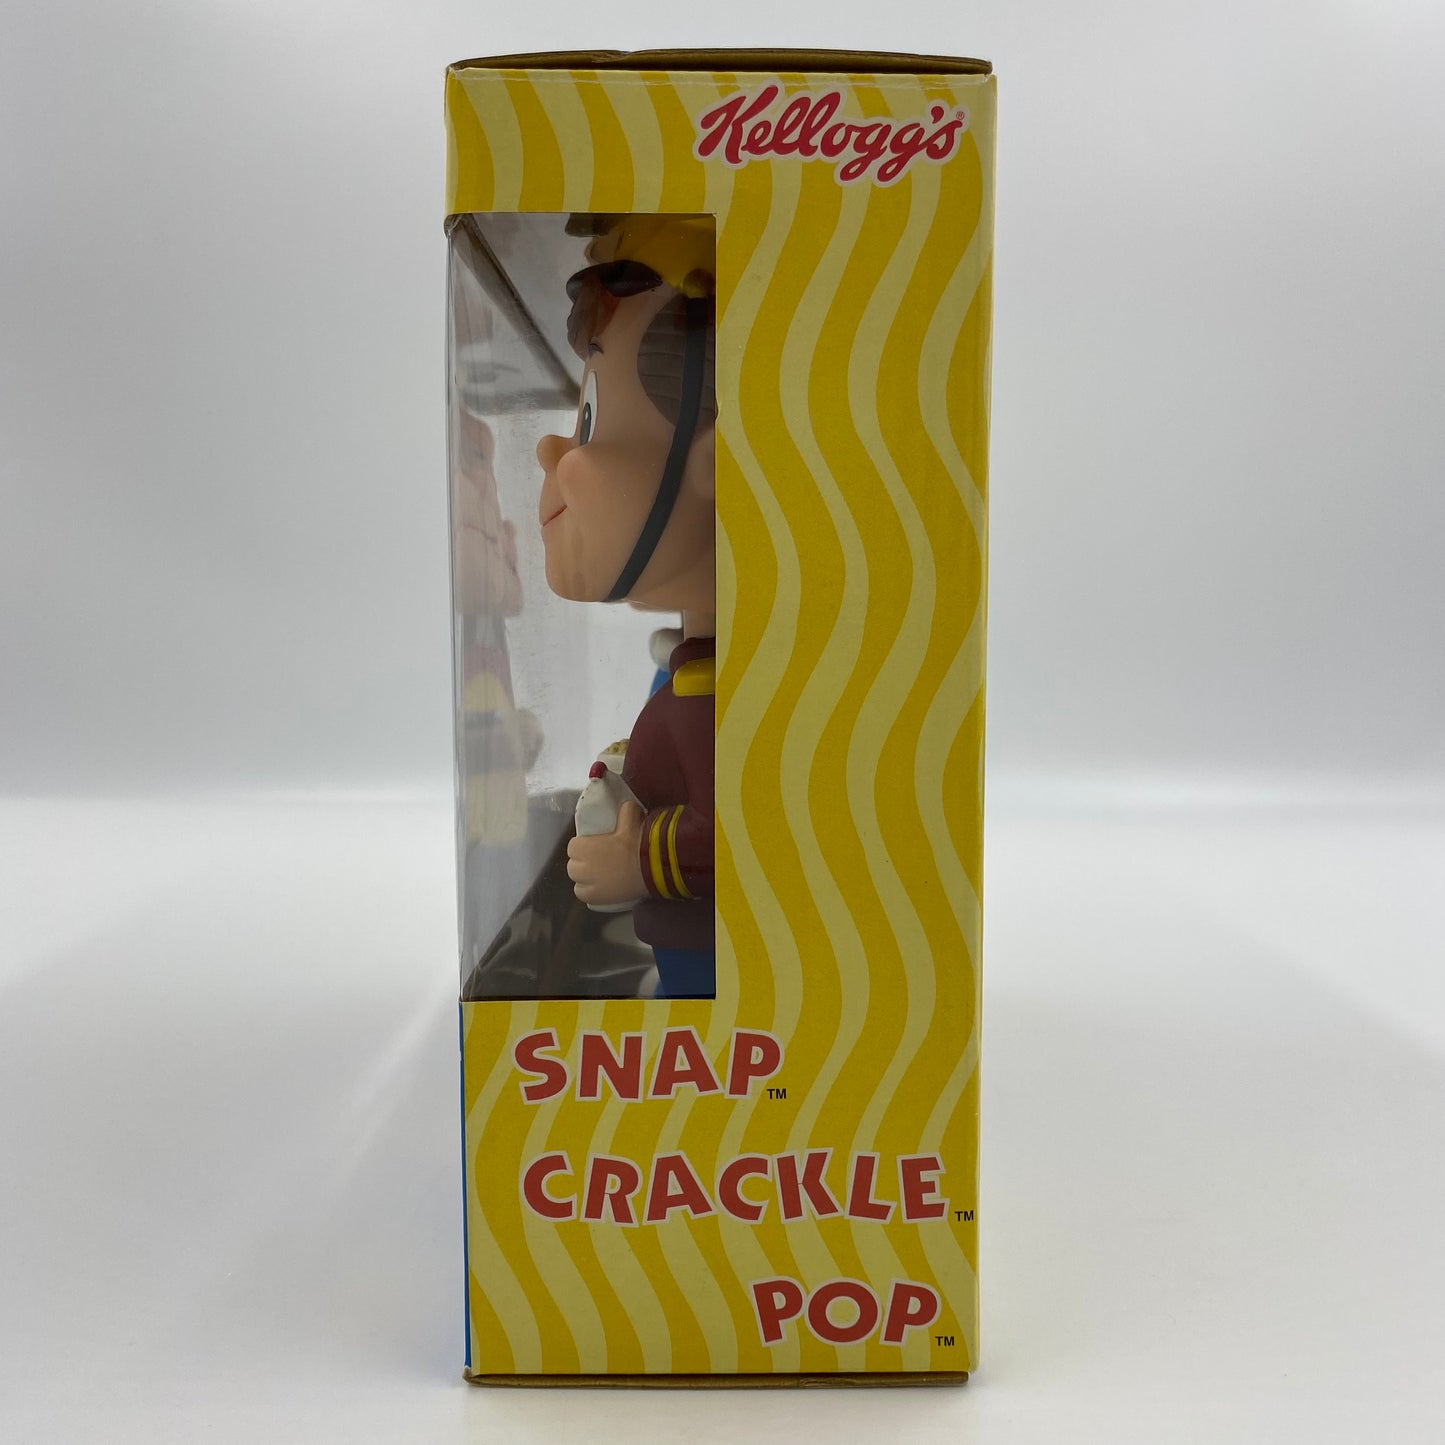 Wacky Wobblers Kellogg’s Rice Krispies Snap Crackle & Pop boxed 7" bobbleheads (2000) Funko